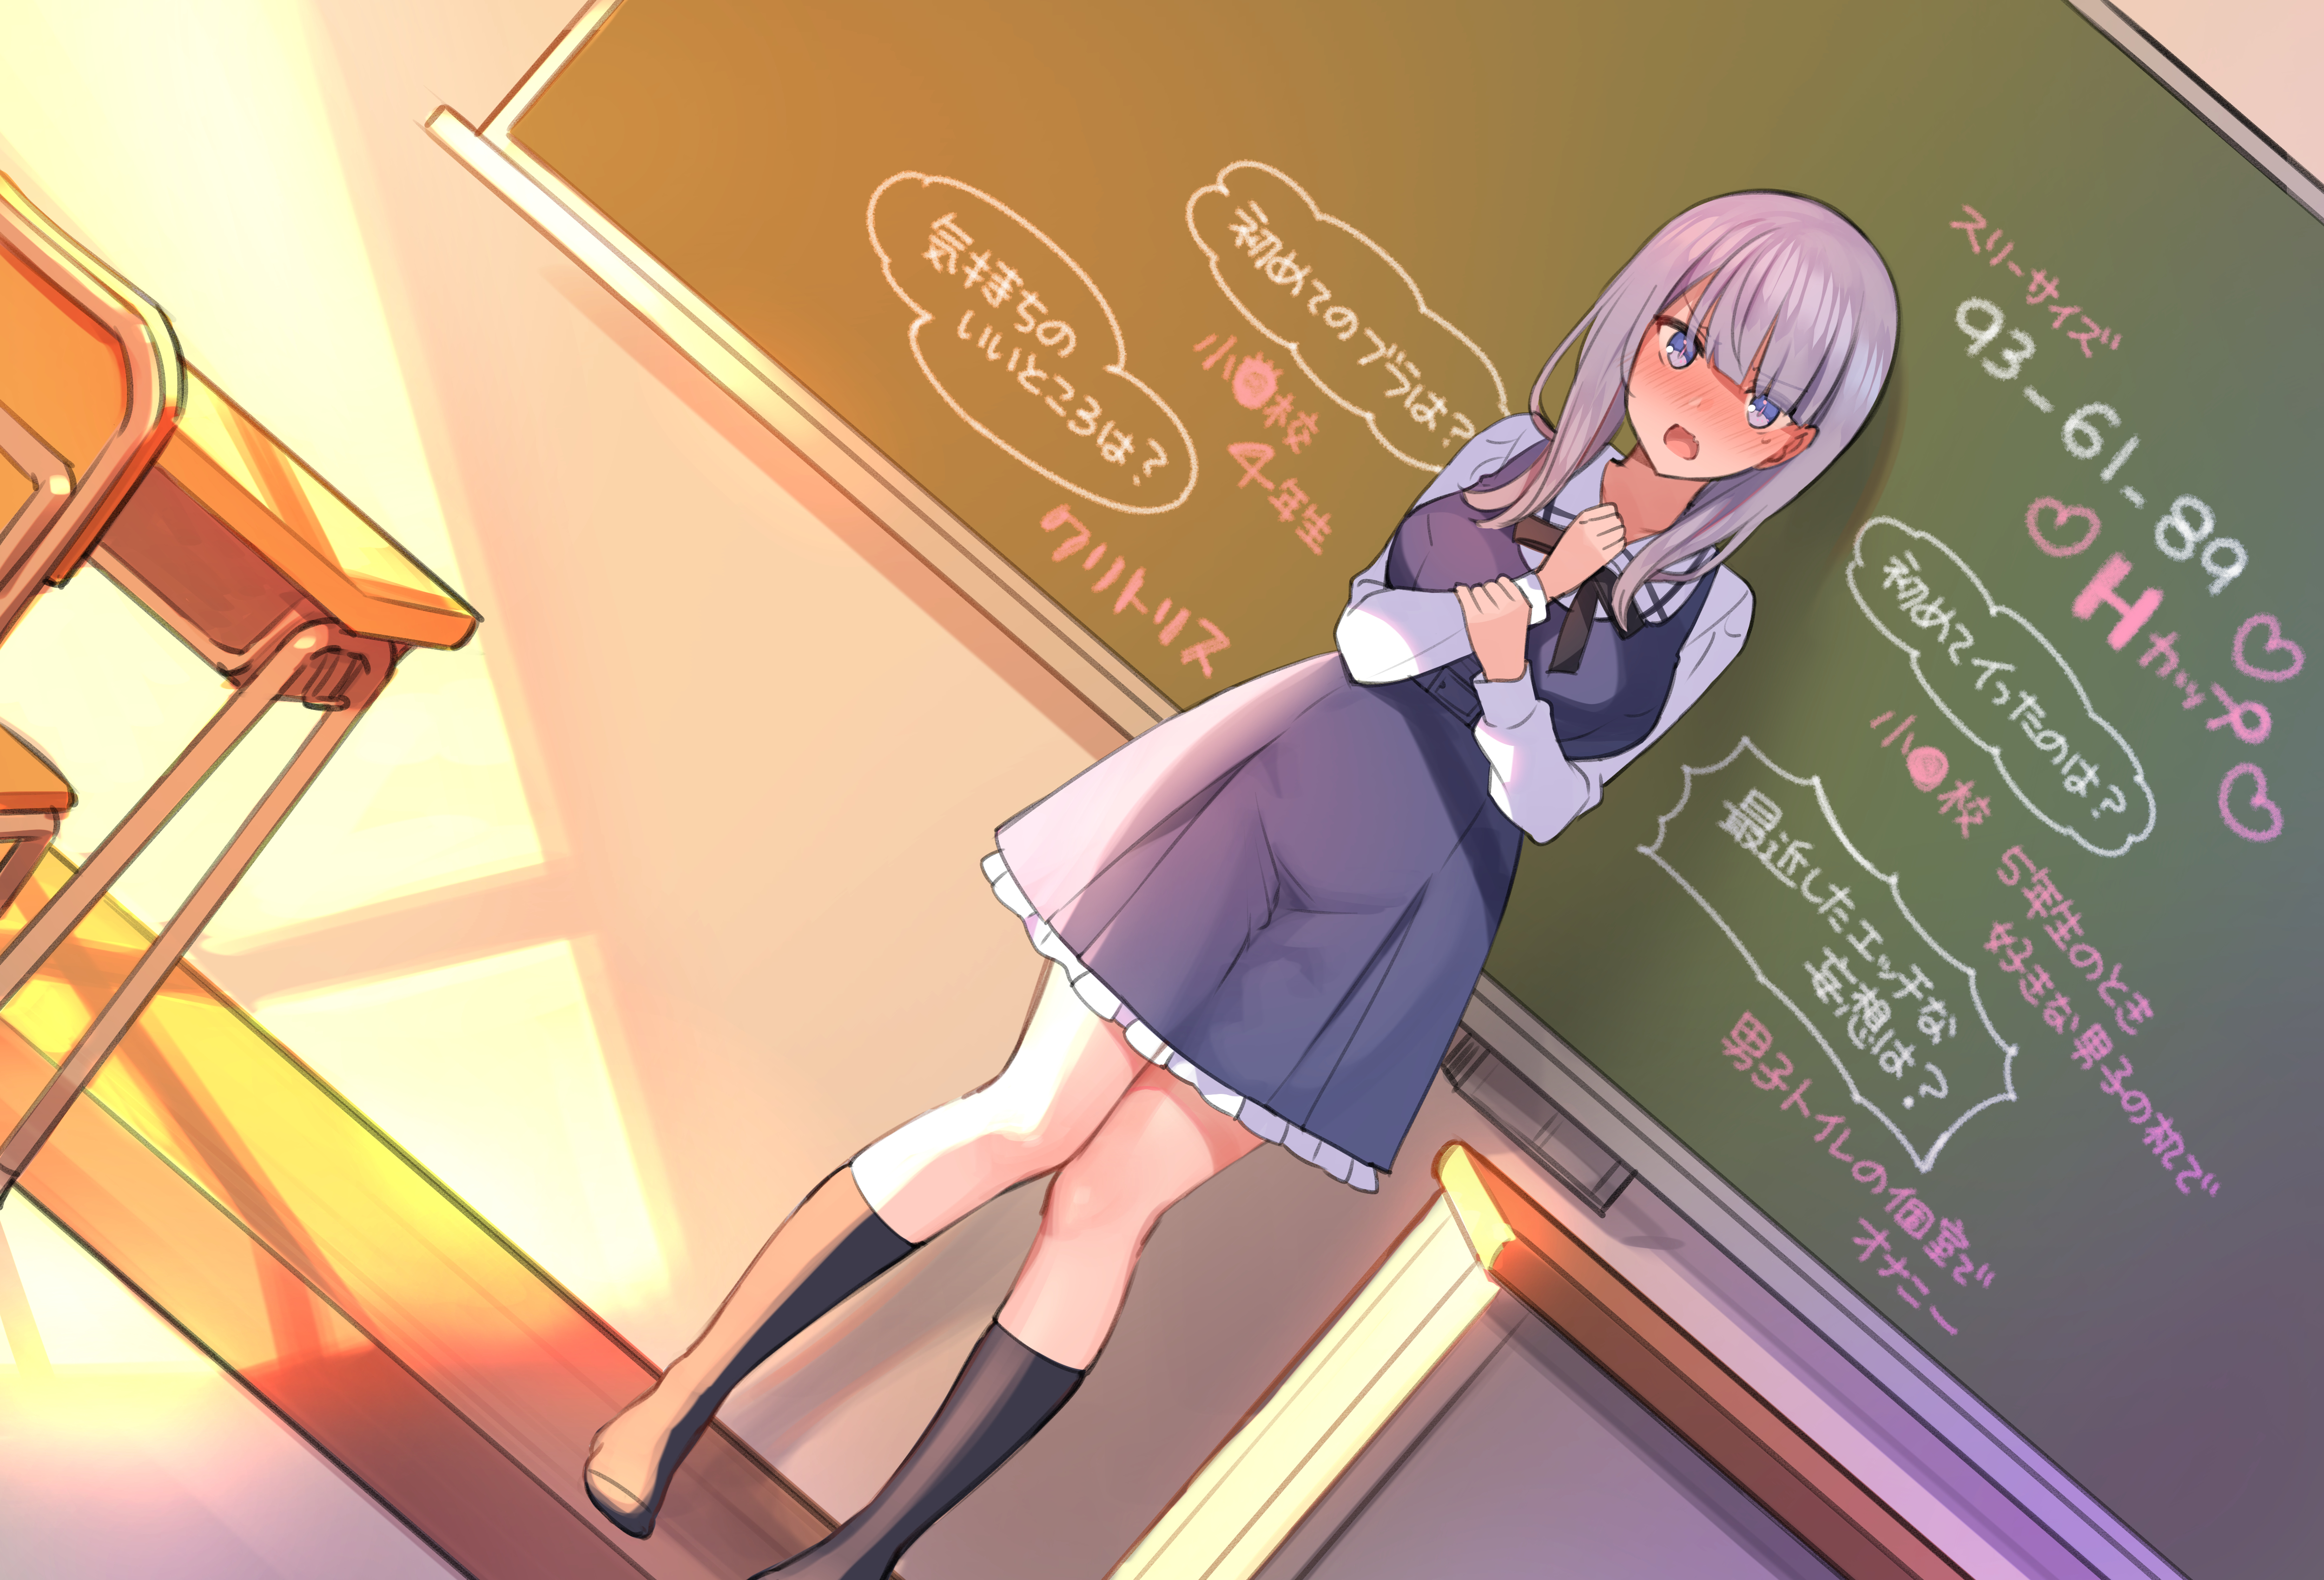 Anime 5000x3400 Mankai Kaika anime anime girls blushing purple hair legs dress chalkboard classroom